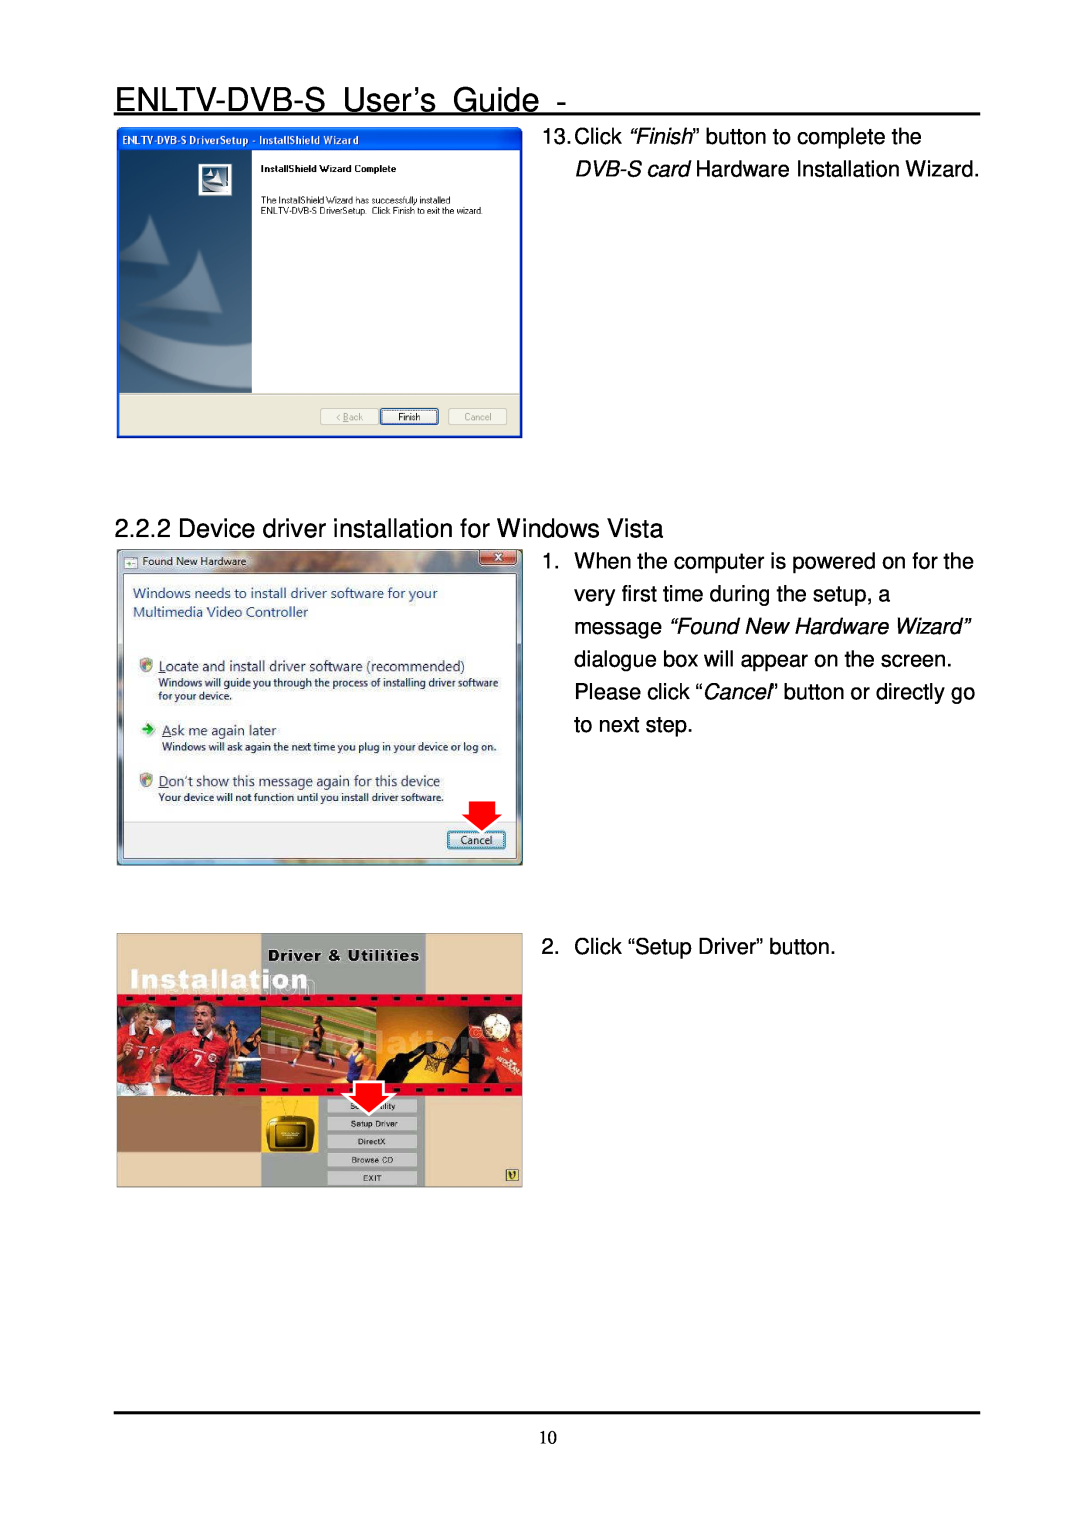 Encore electronic manual Device driver installation for Windows Vista, ENLTV-DVB-S User’s Guide 